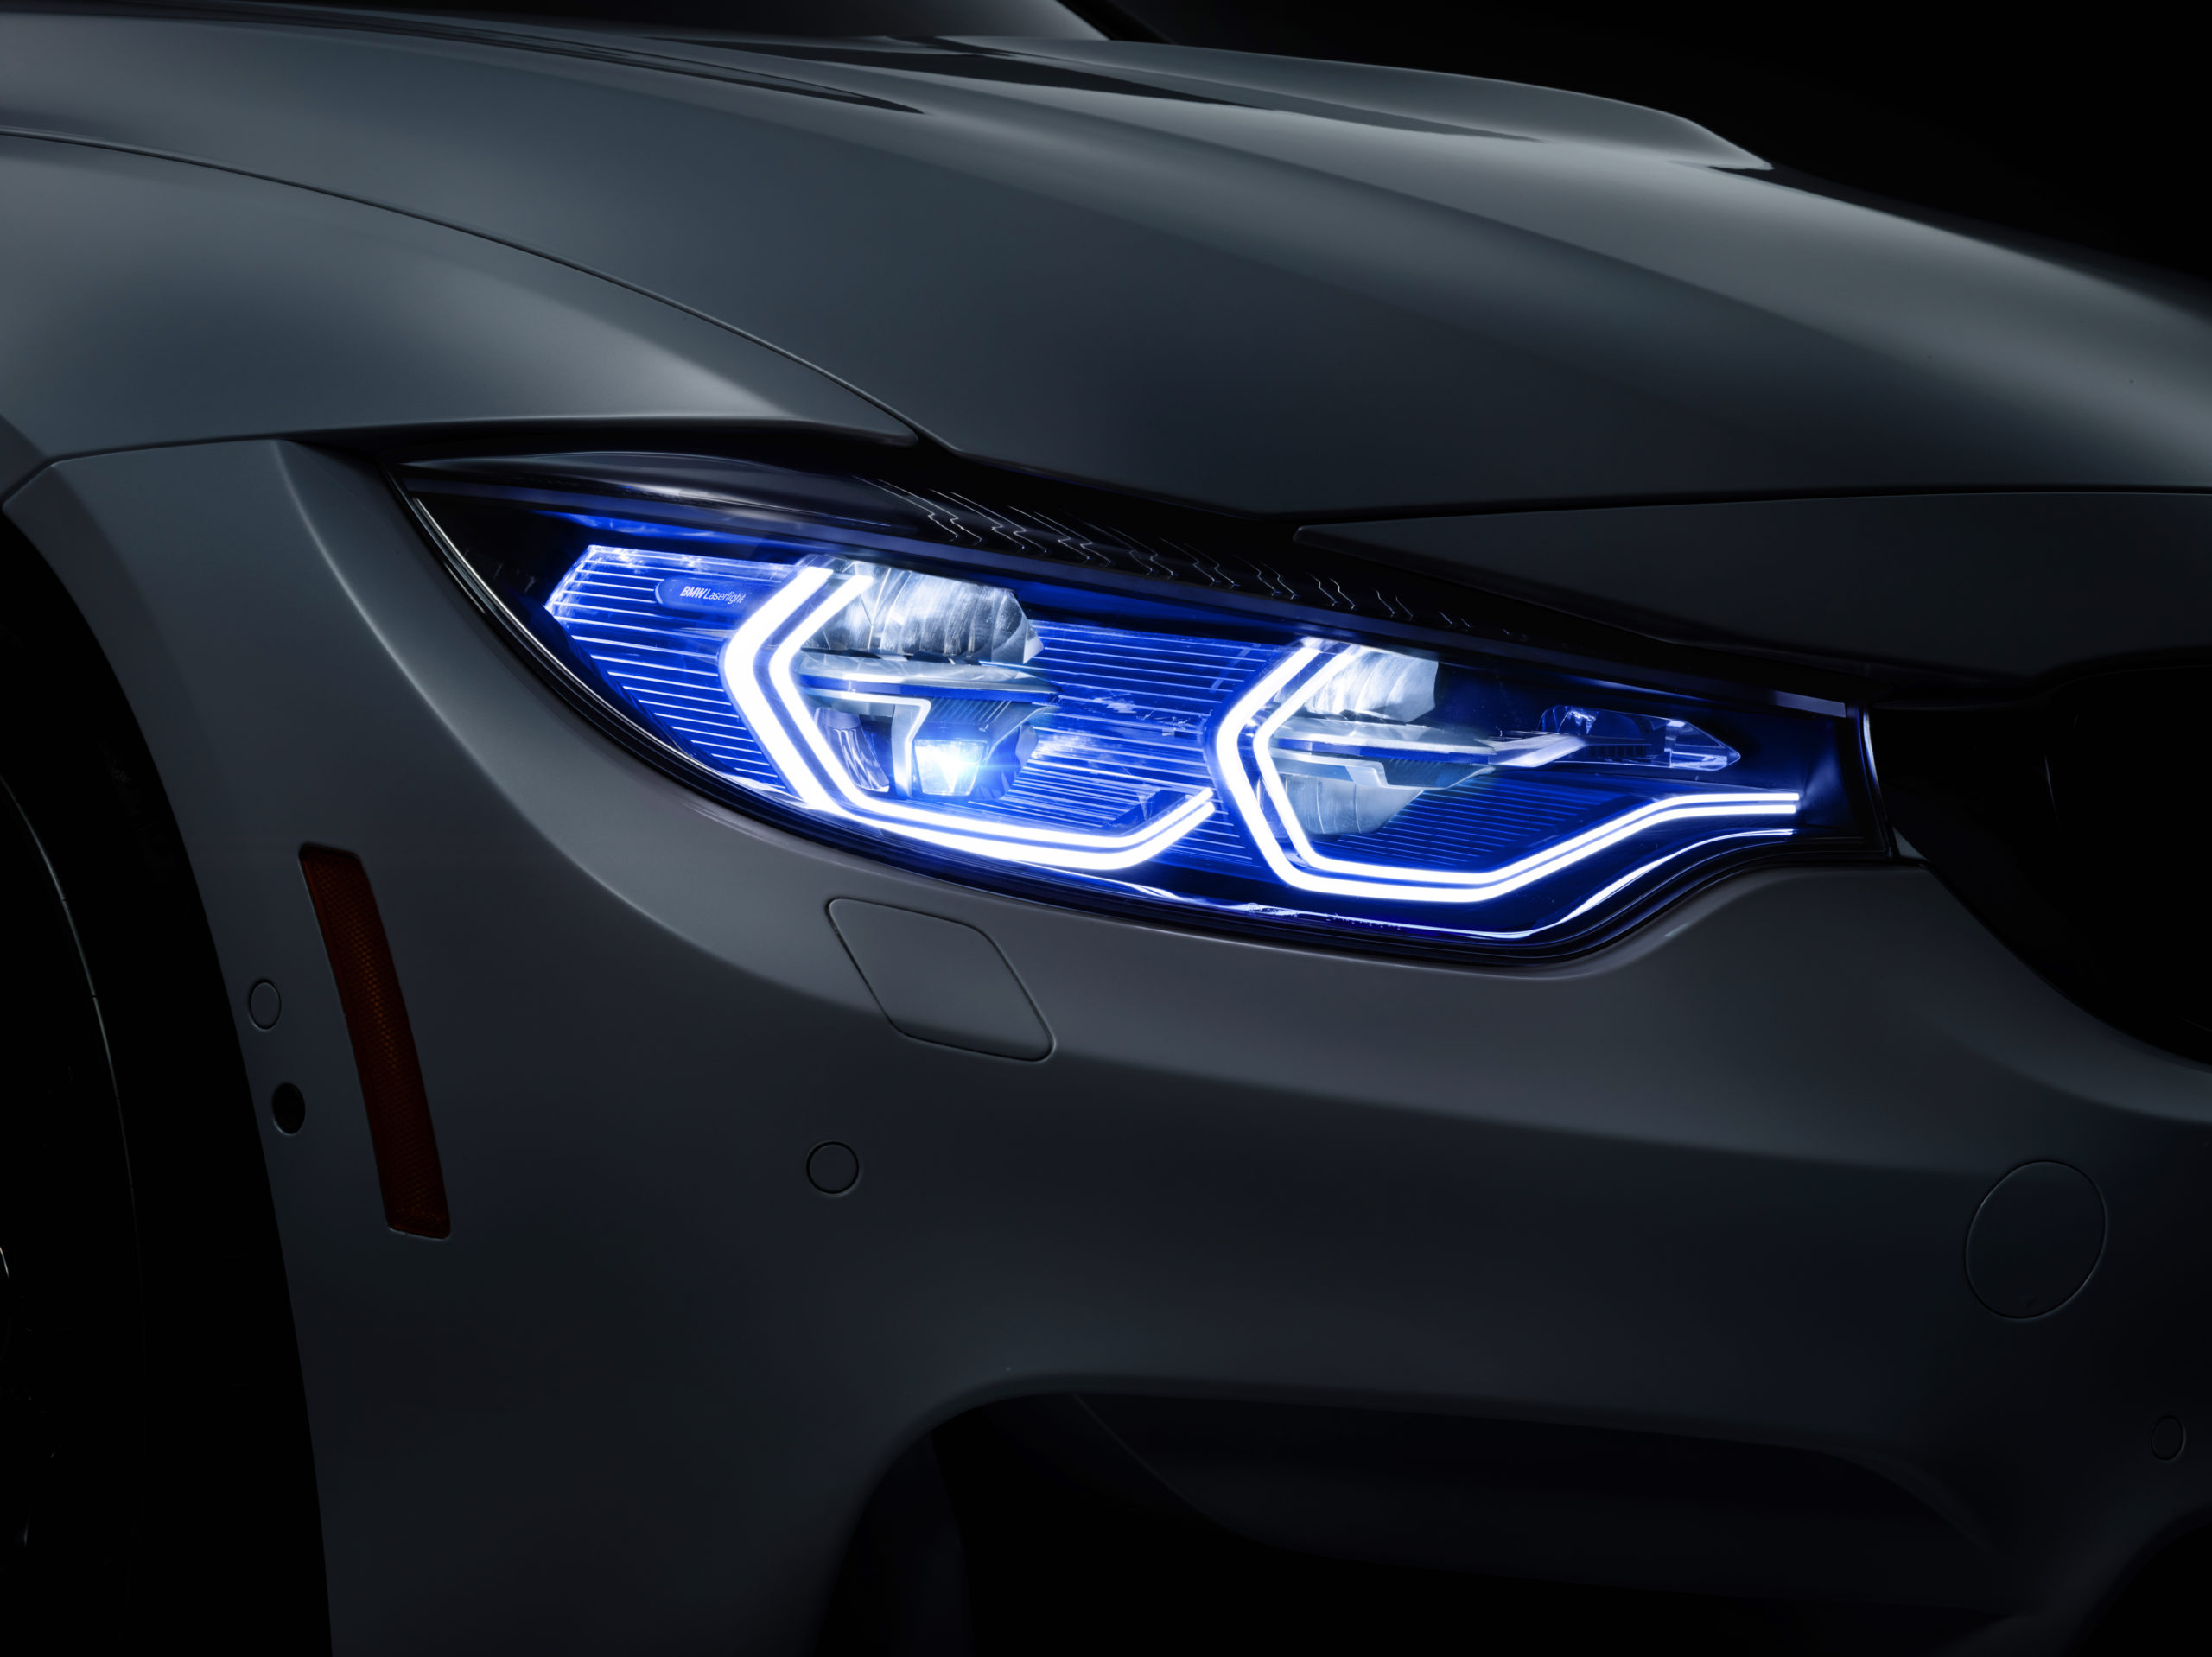 CES 2015 Let the BMW M4 Concept Iconic Lights shine